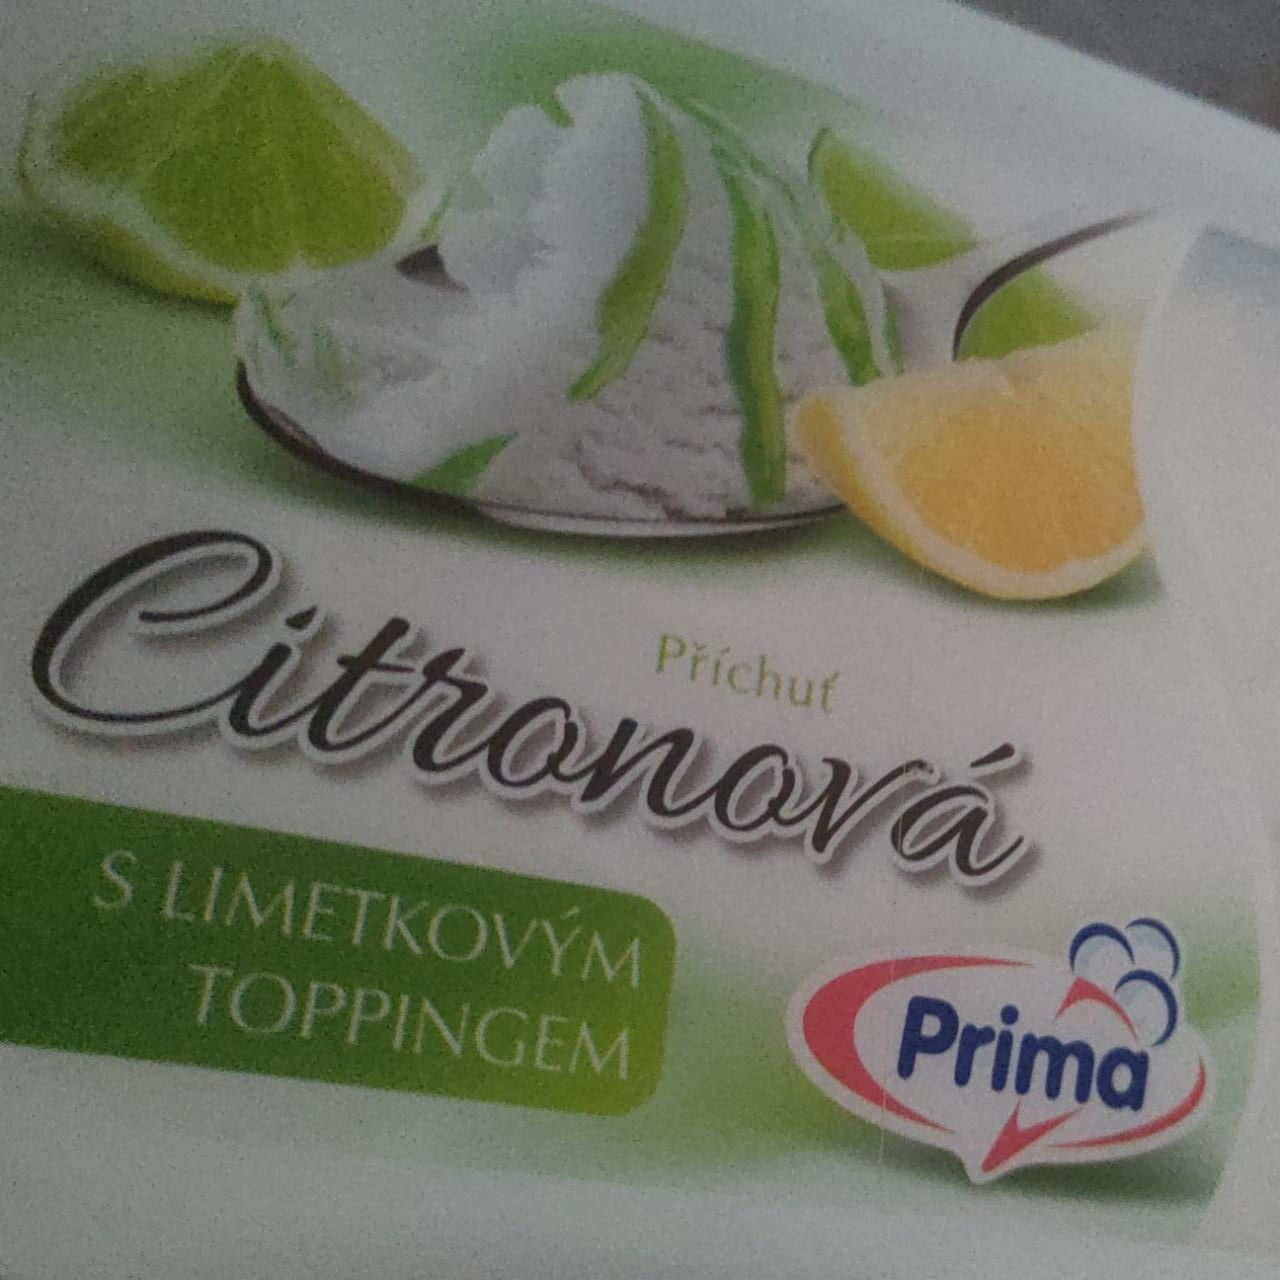 Fotografie - Citronová s limetkovým toppingem Prima